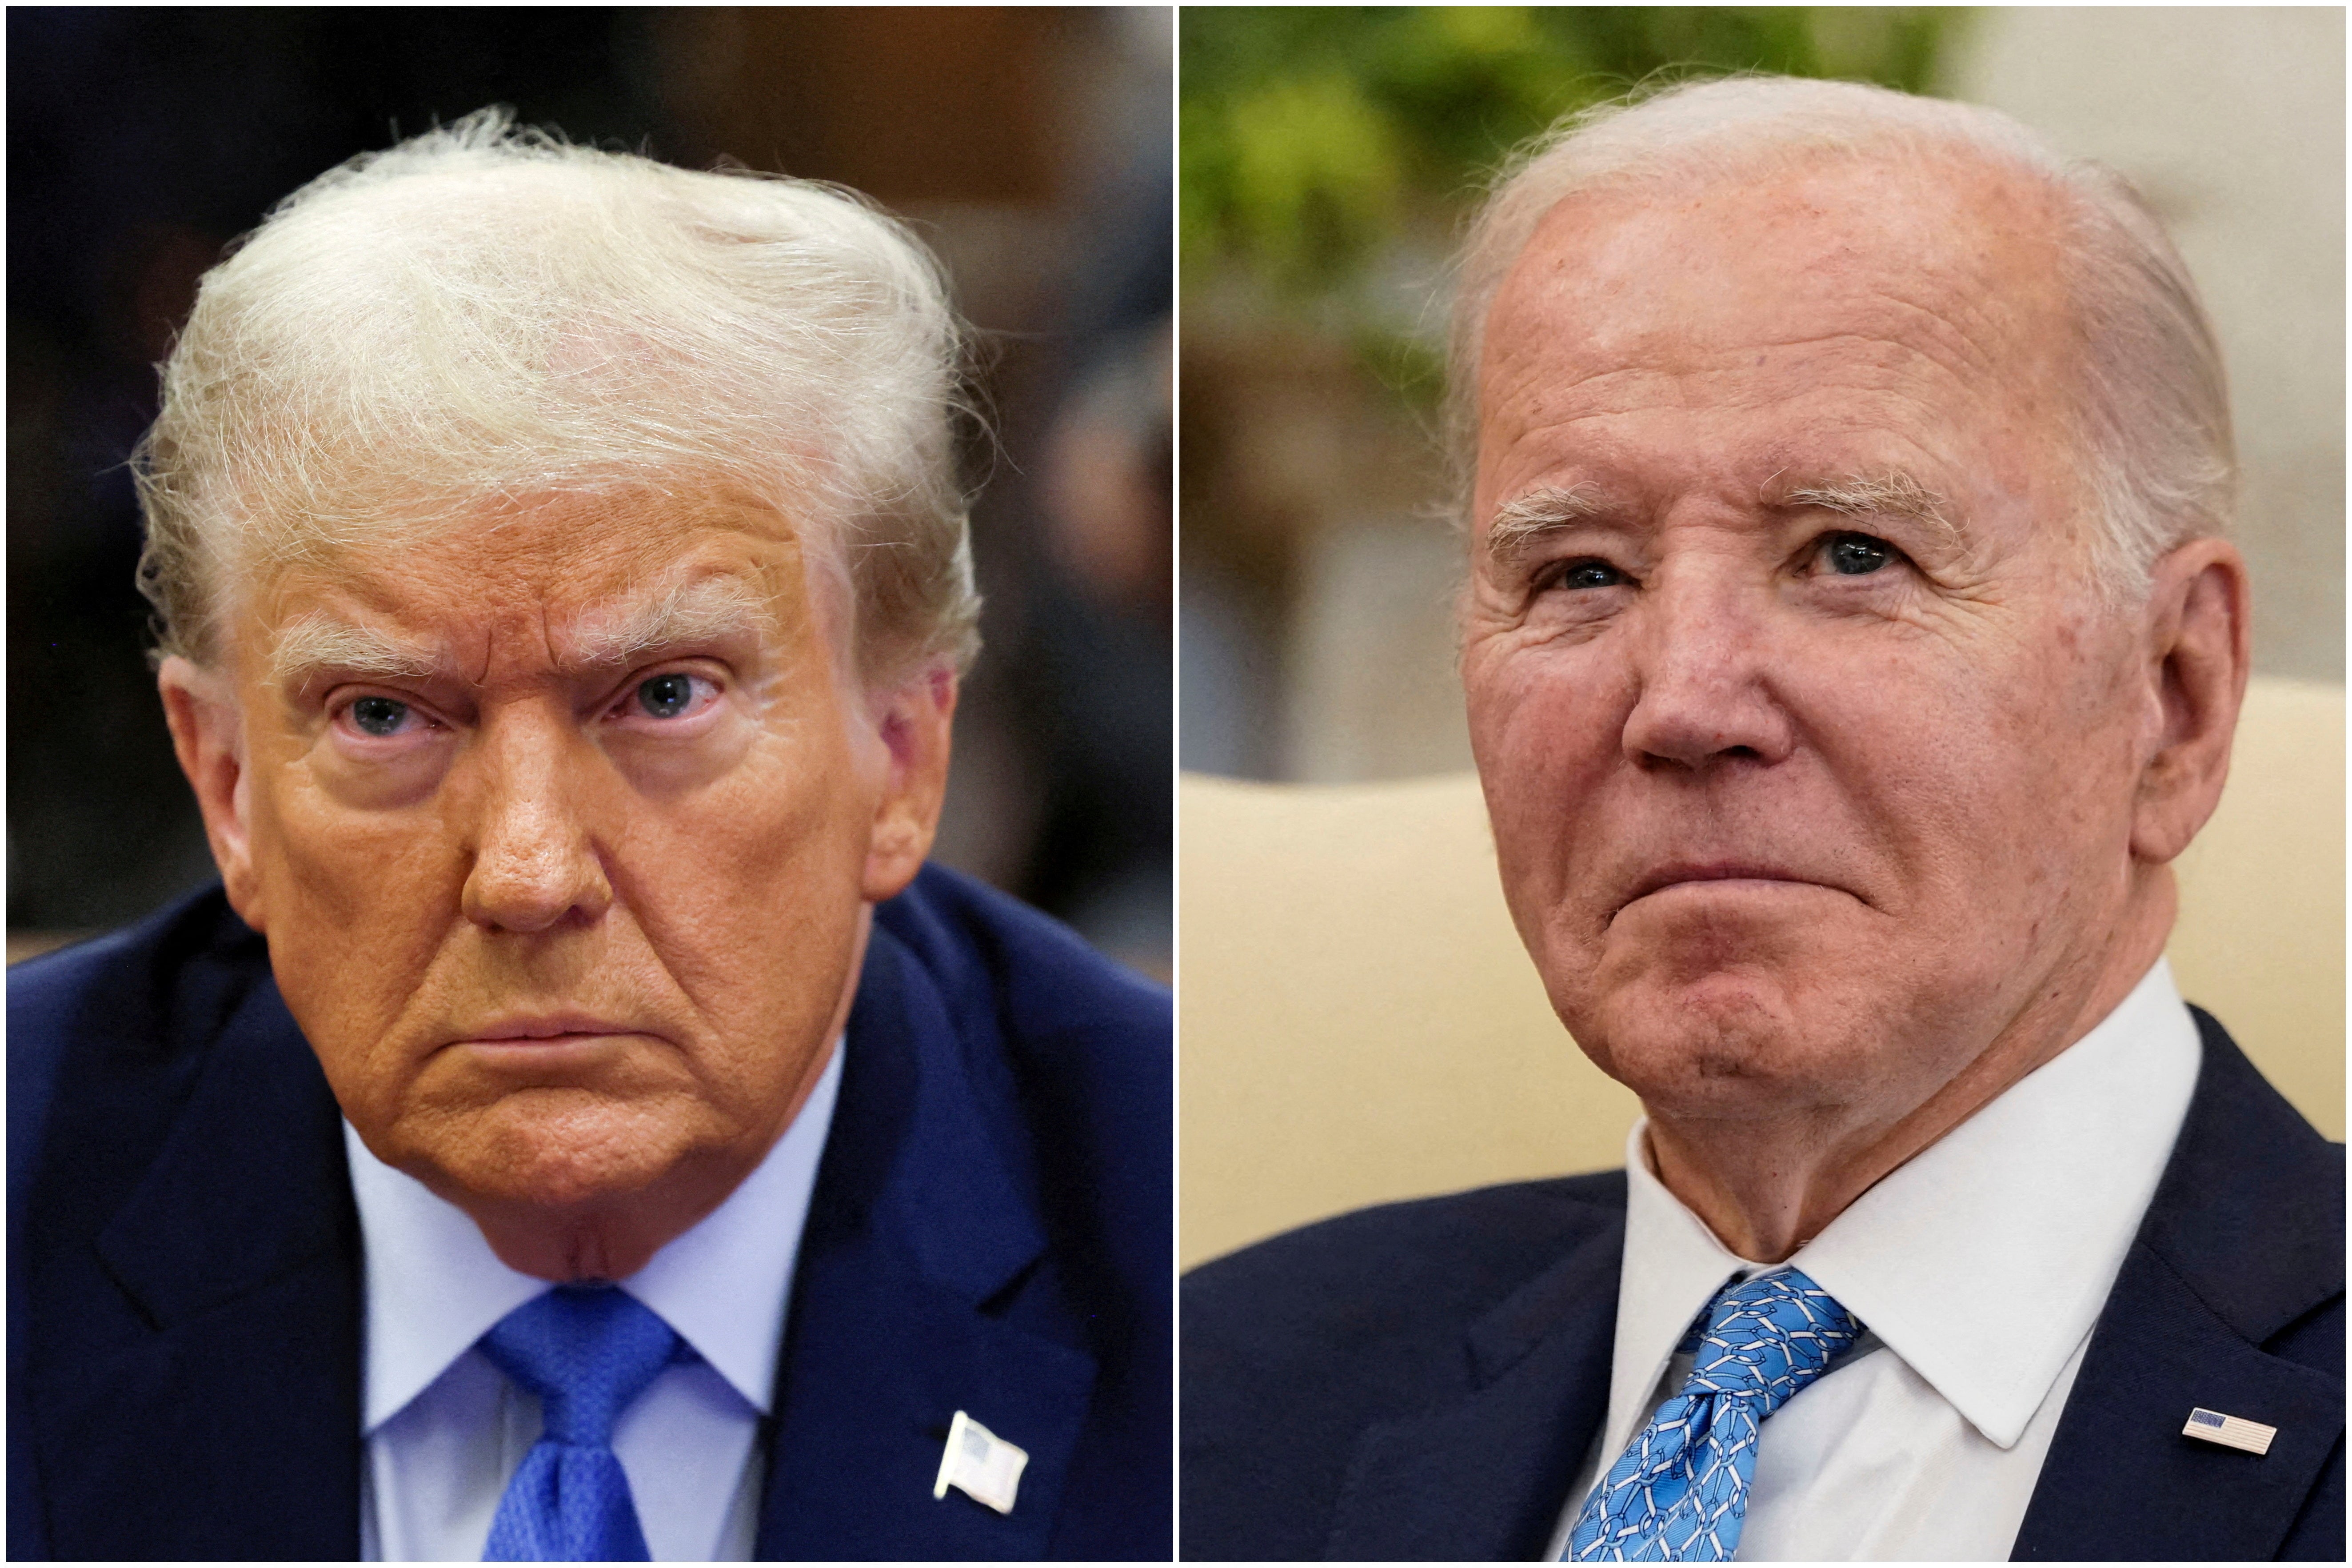 Donald Trump and Joe Biden are their respective parties’ presumed nominees